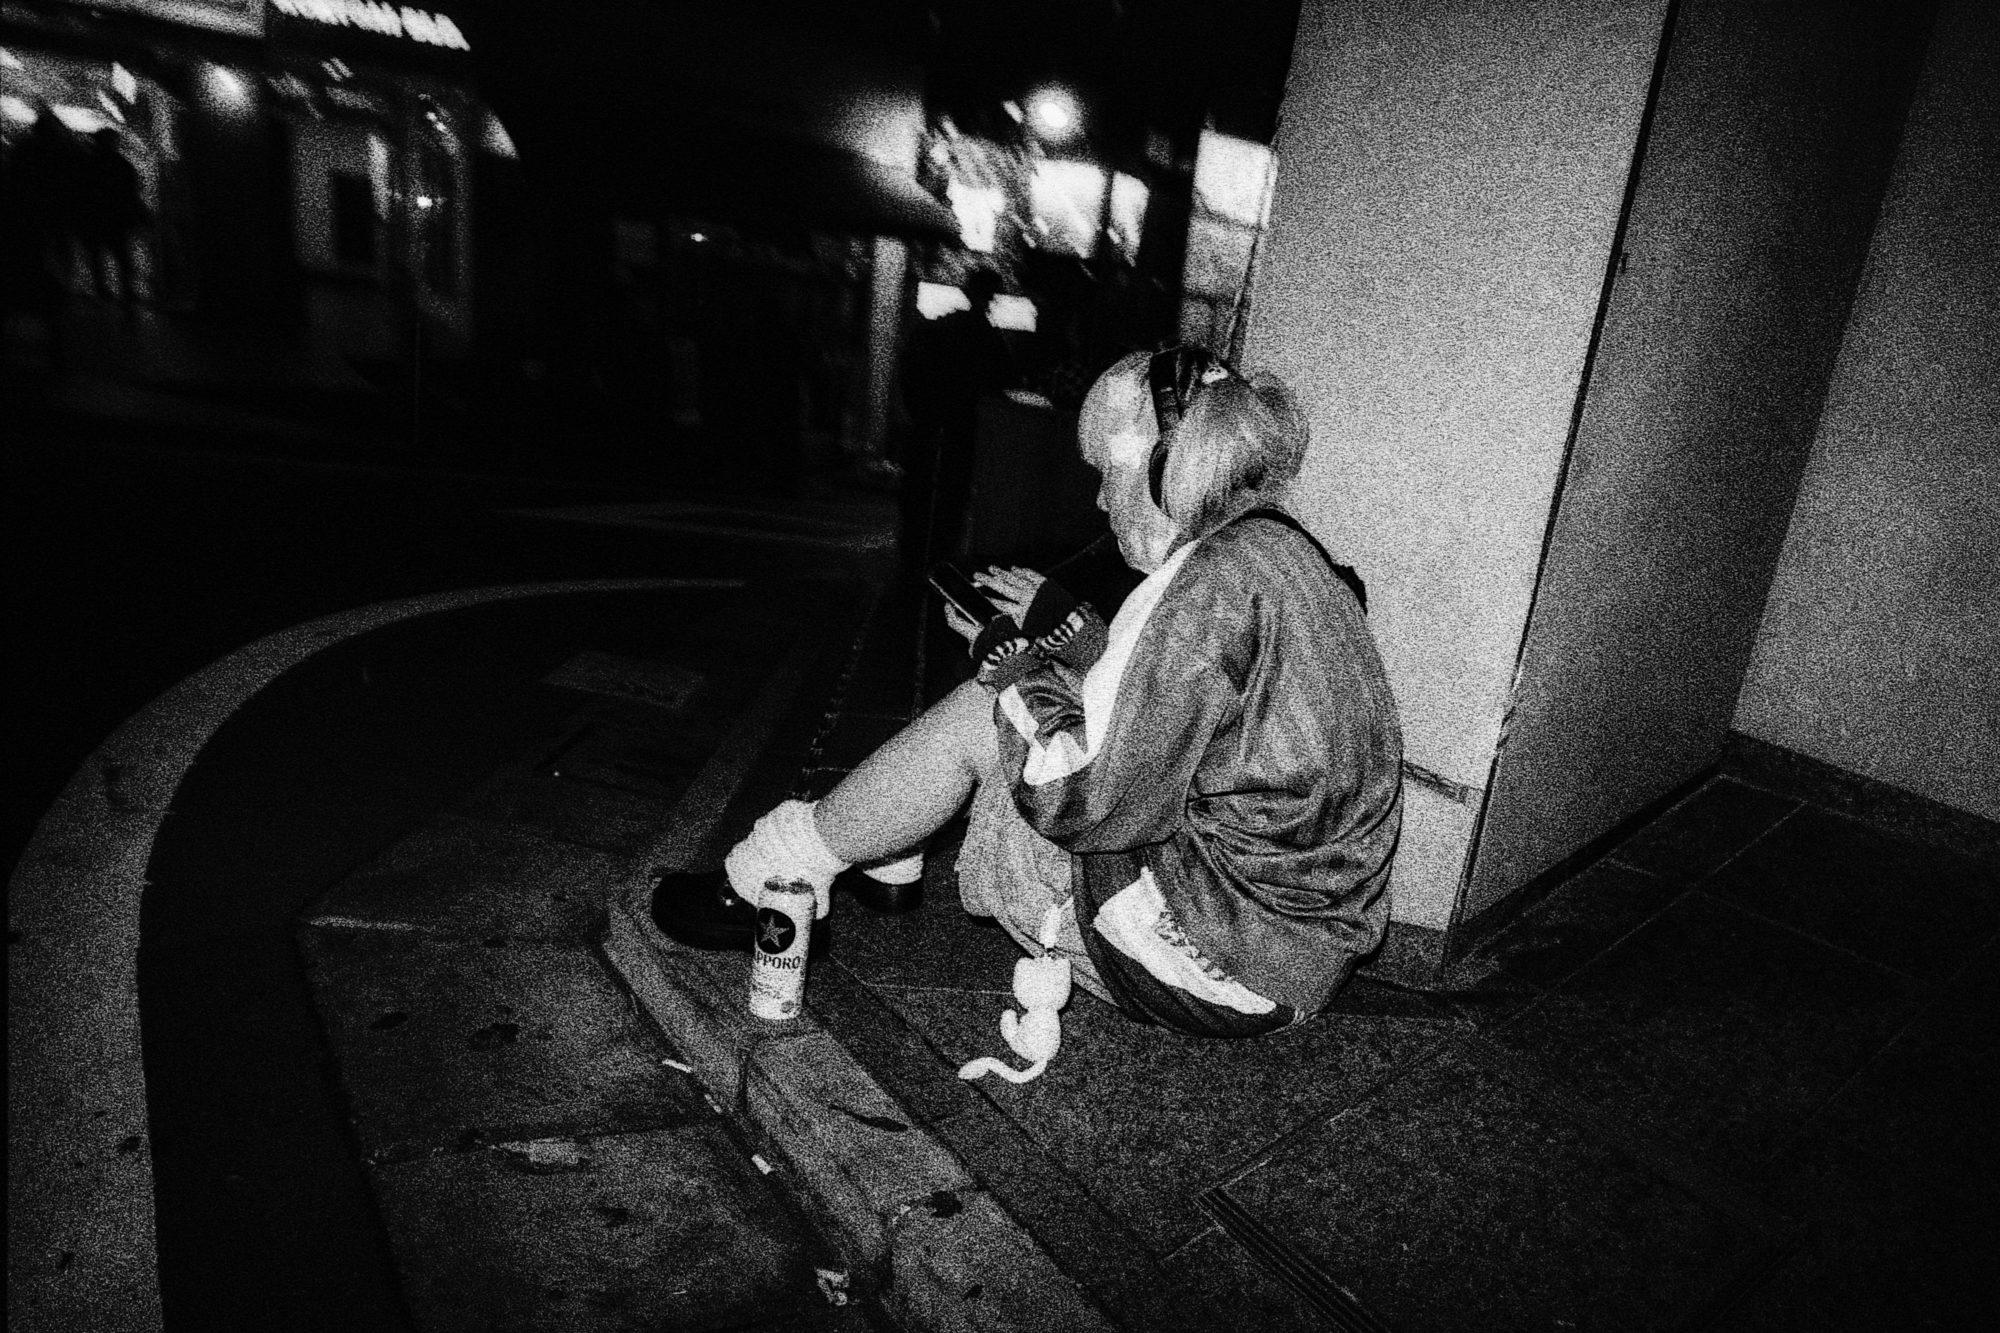 Tokyo Street Photography with Joe Greer